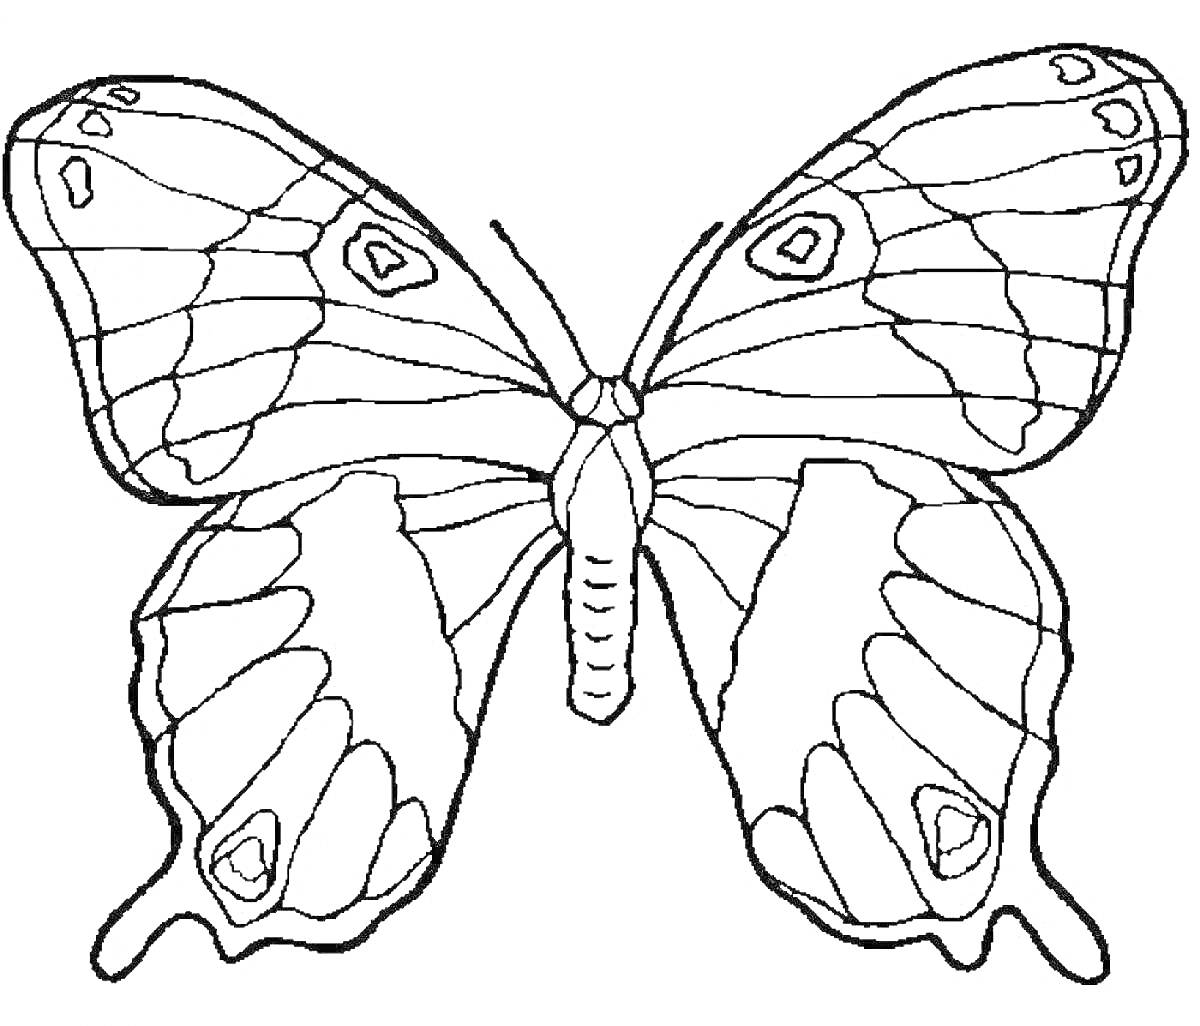 Раскраска Бабочка с узорчатыми крыльями для раскраски